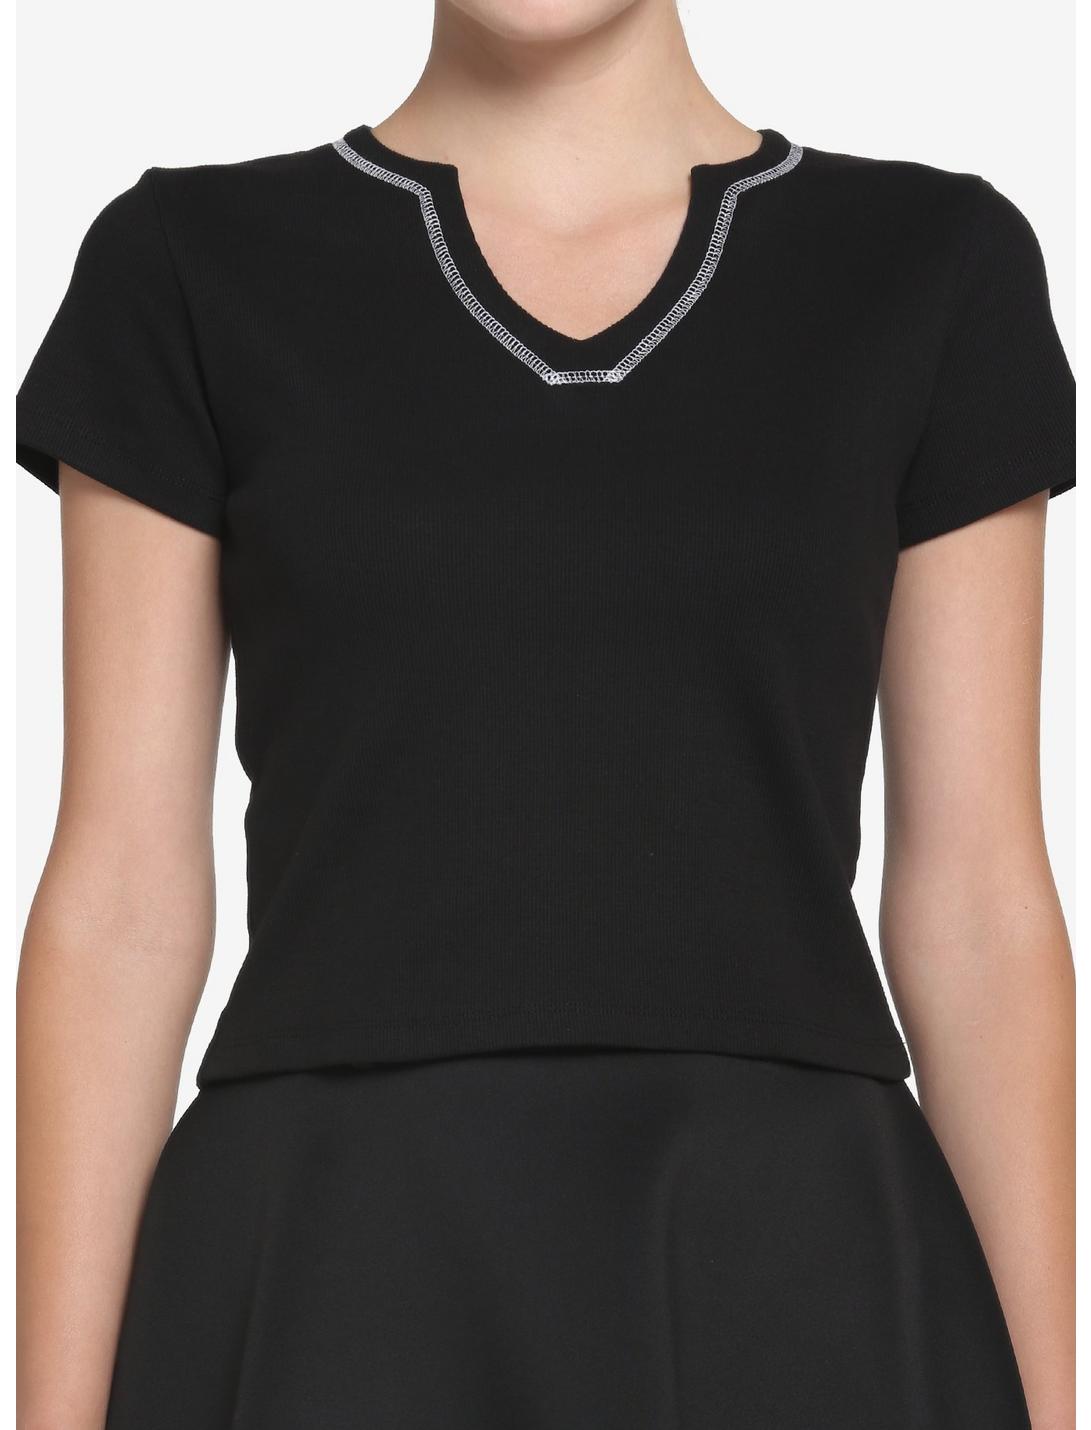 Black & White Contrast Stitch Girls Crop T-Shirt, BLACK, hi-res